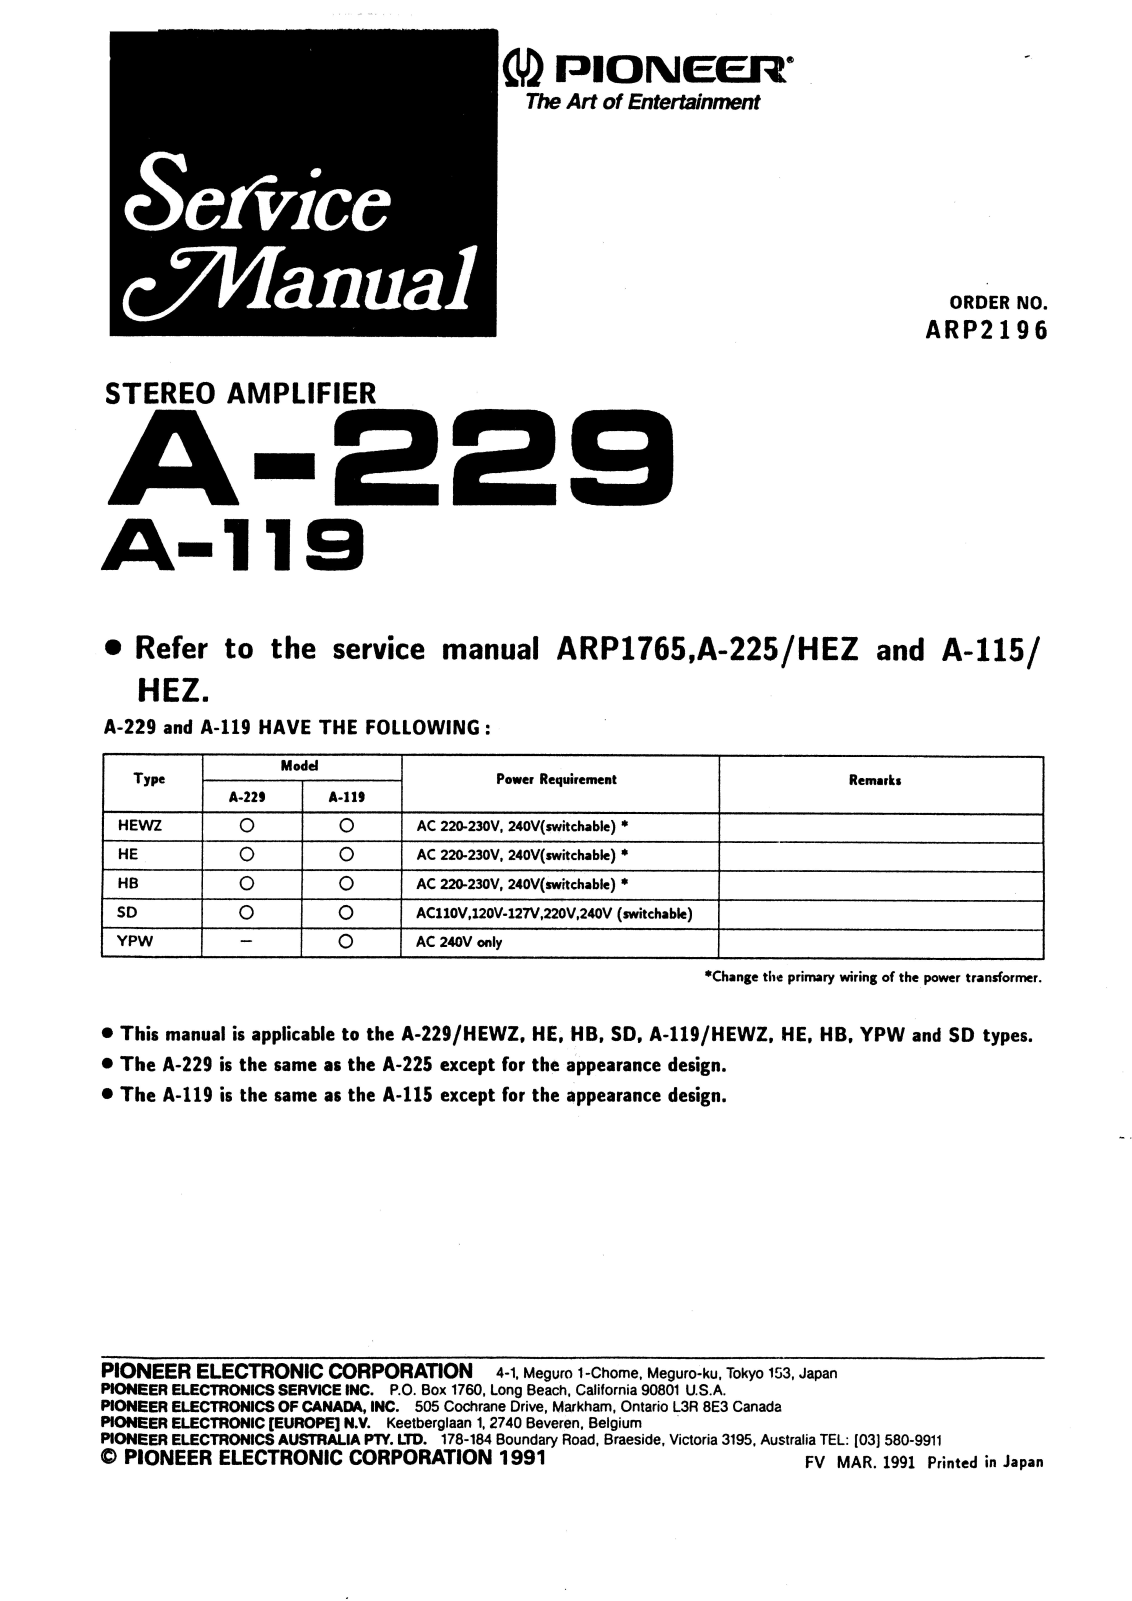 Pioneer A-229, A-119 Service manual